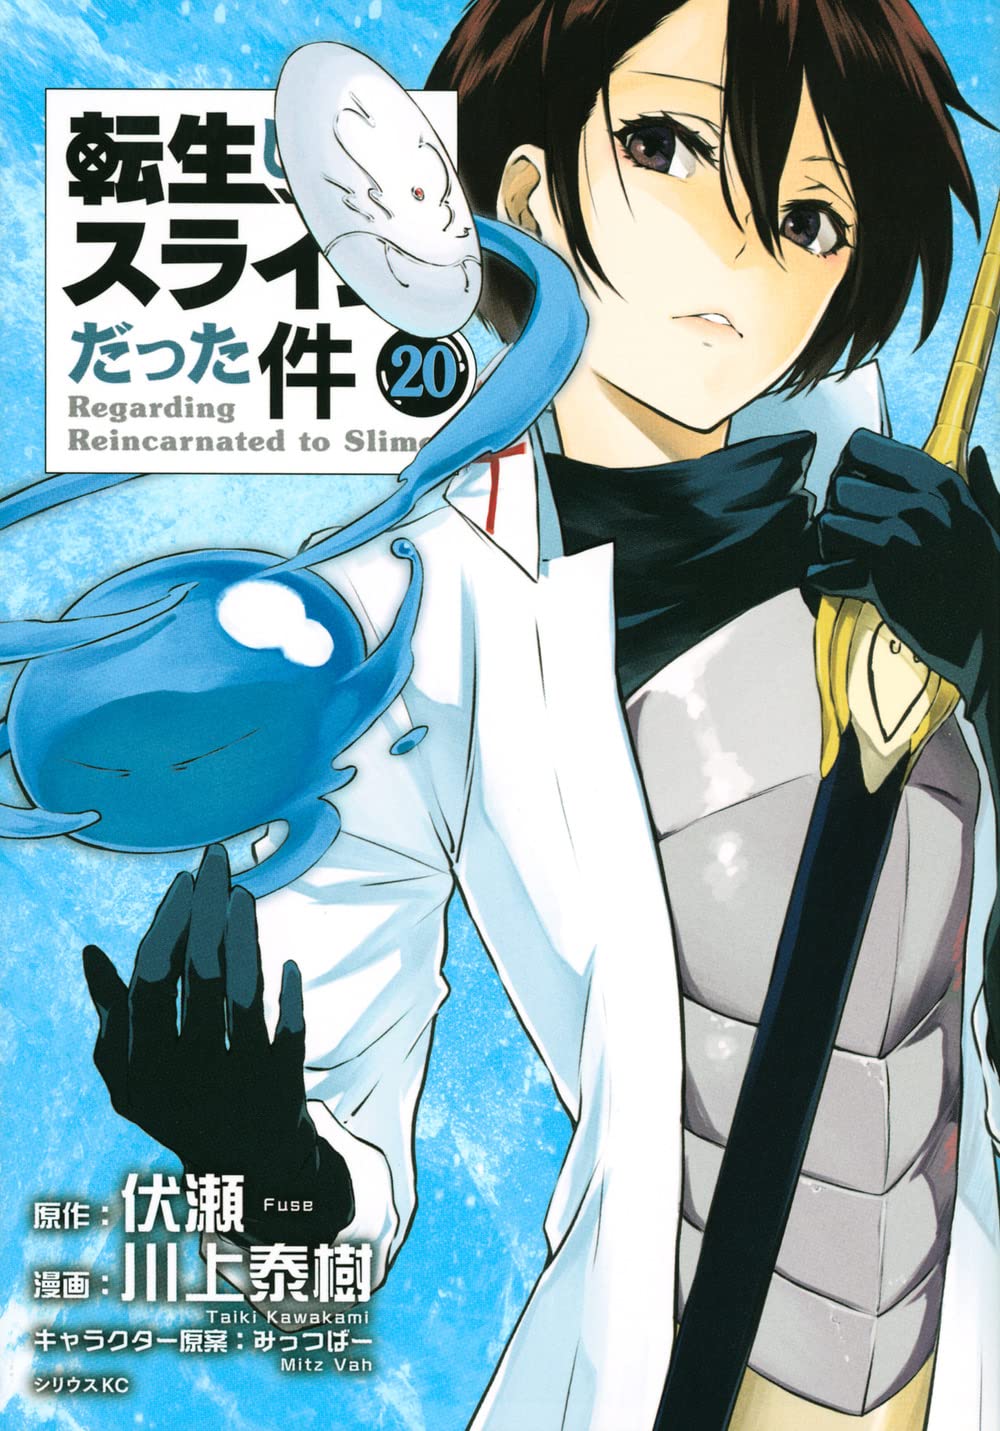 Tensei shitara Slime Datta Ken - That Time I Got Reincarnated as a Slime  Anime Art Poster